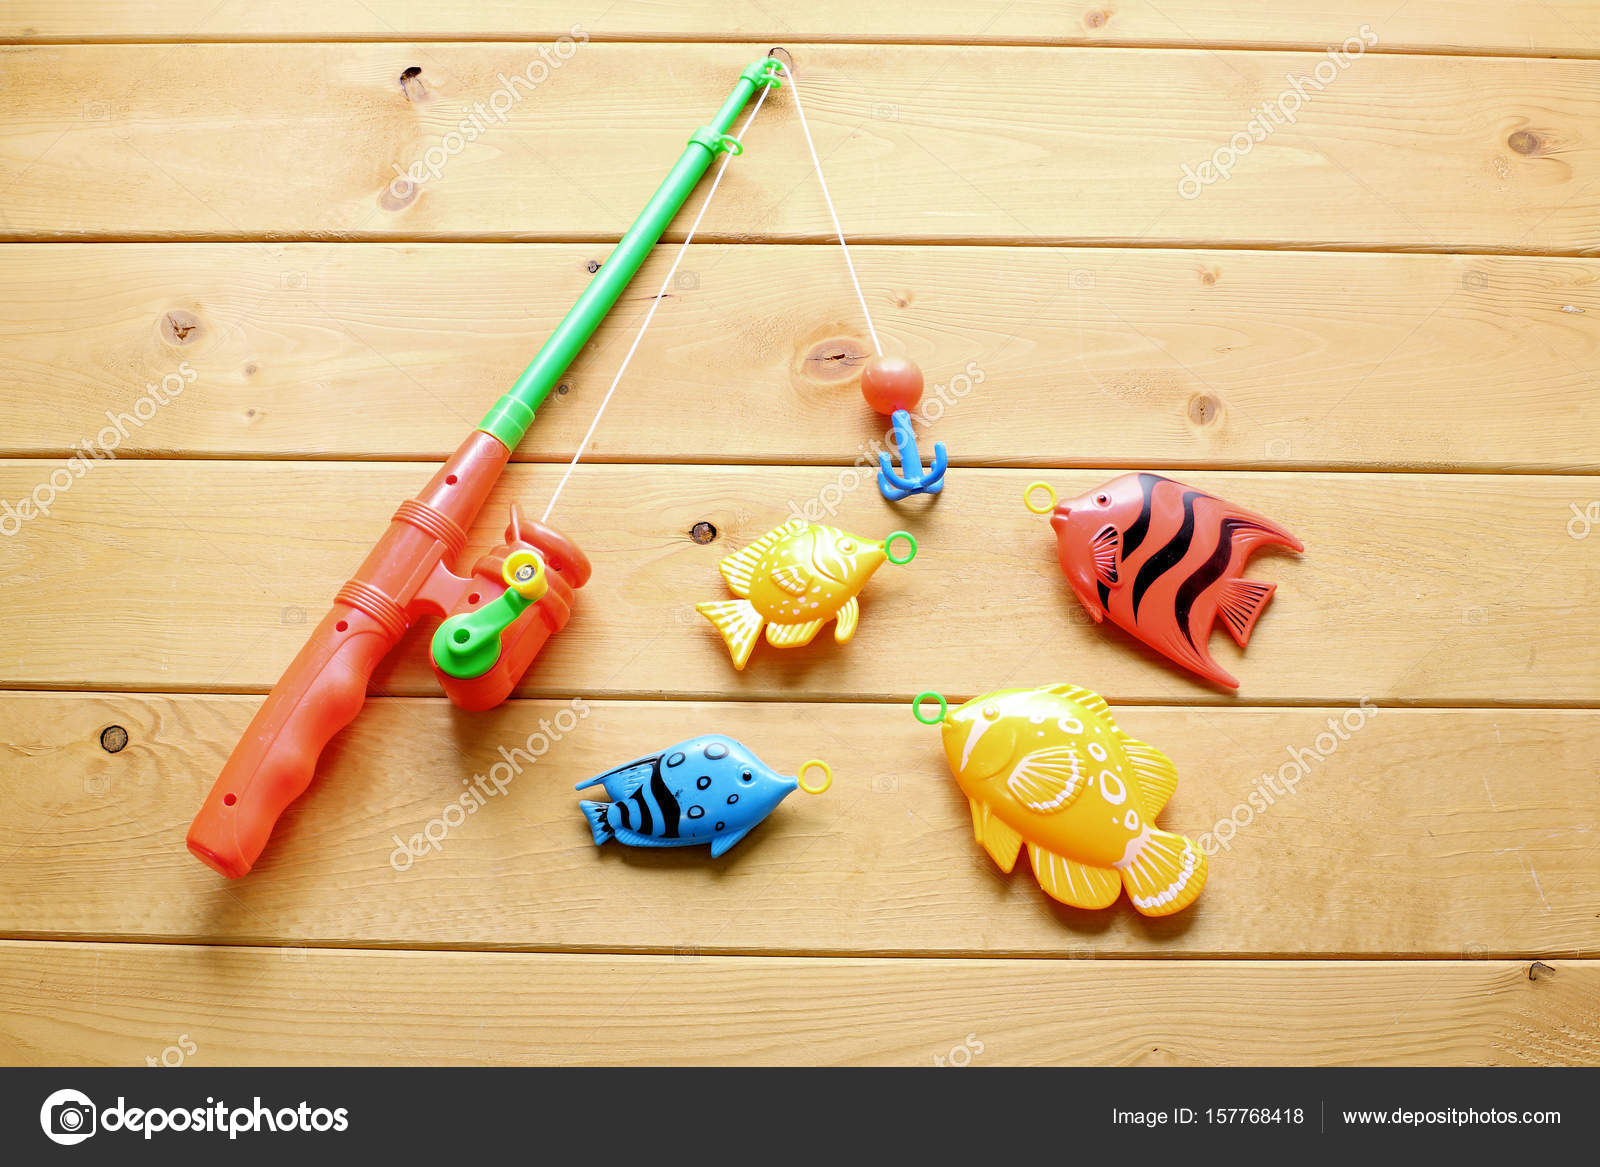 https://st3.depositphotos.com/1009322/15776/i/1600/depositphotos_157768418-stock-photo-plastic-fishing-toy.jpg